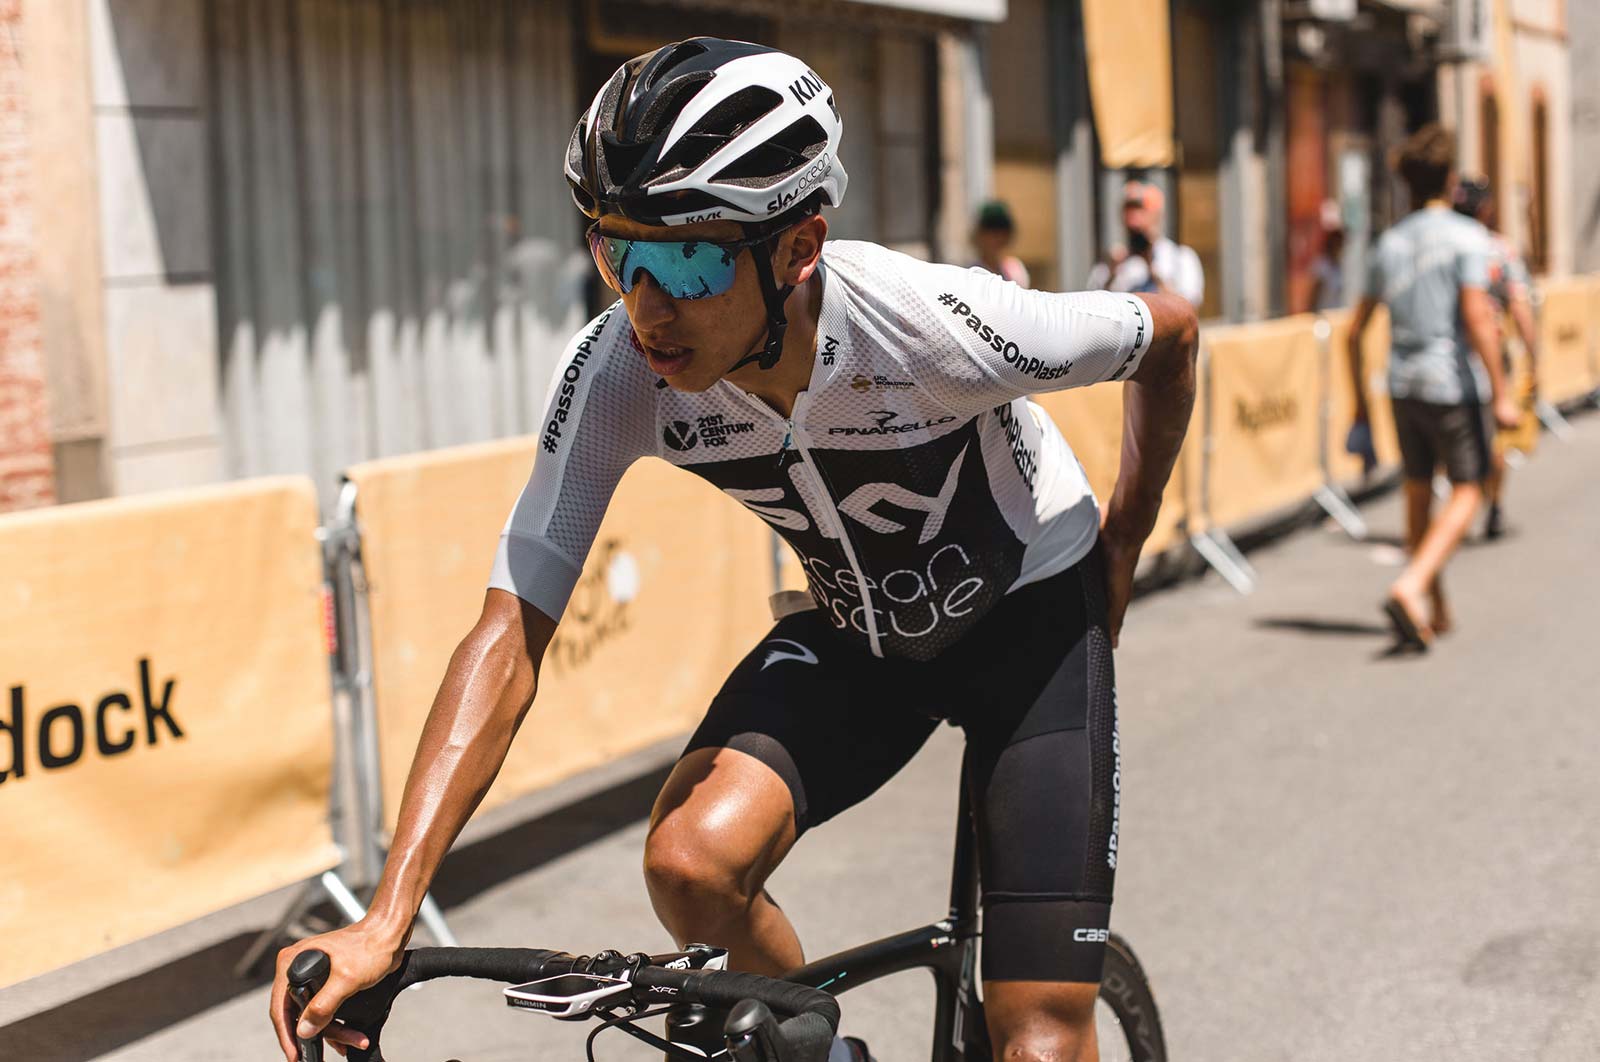 2019 Tour de France - Egan Bernal